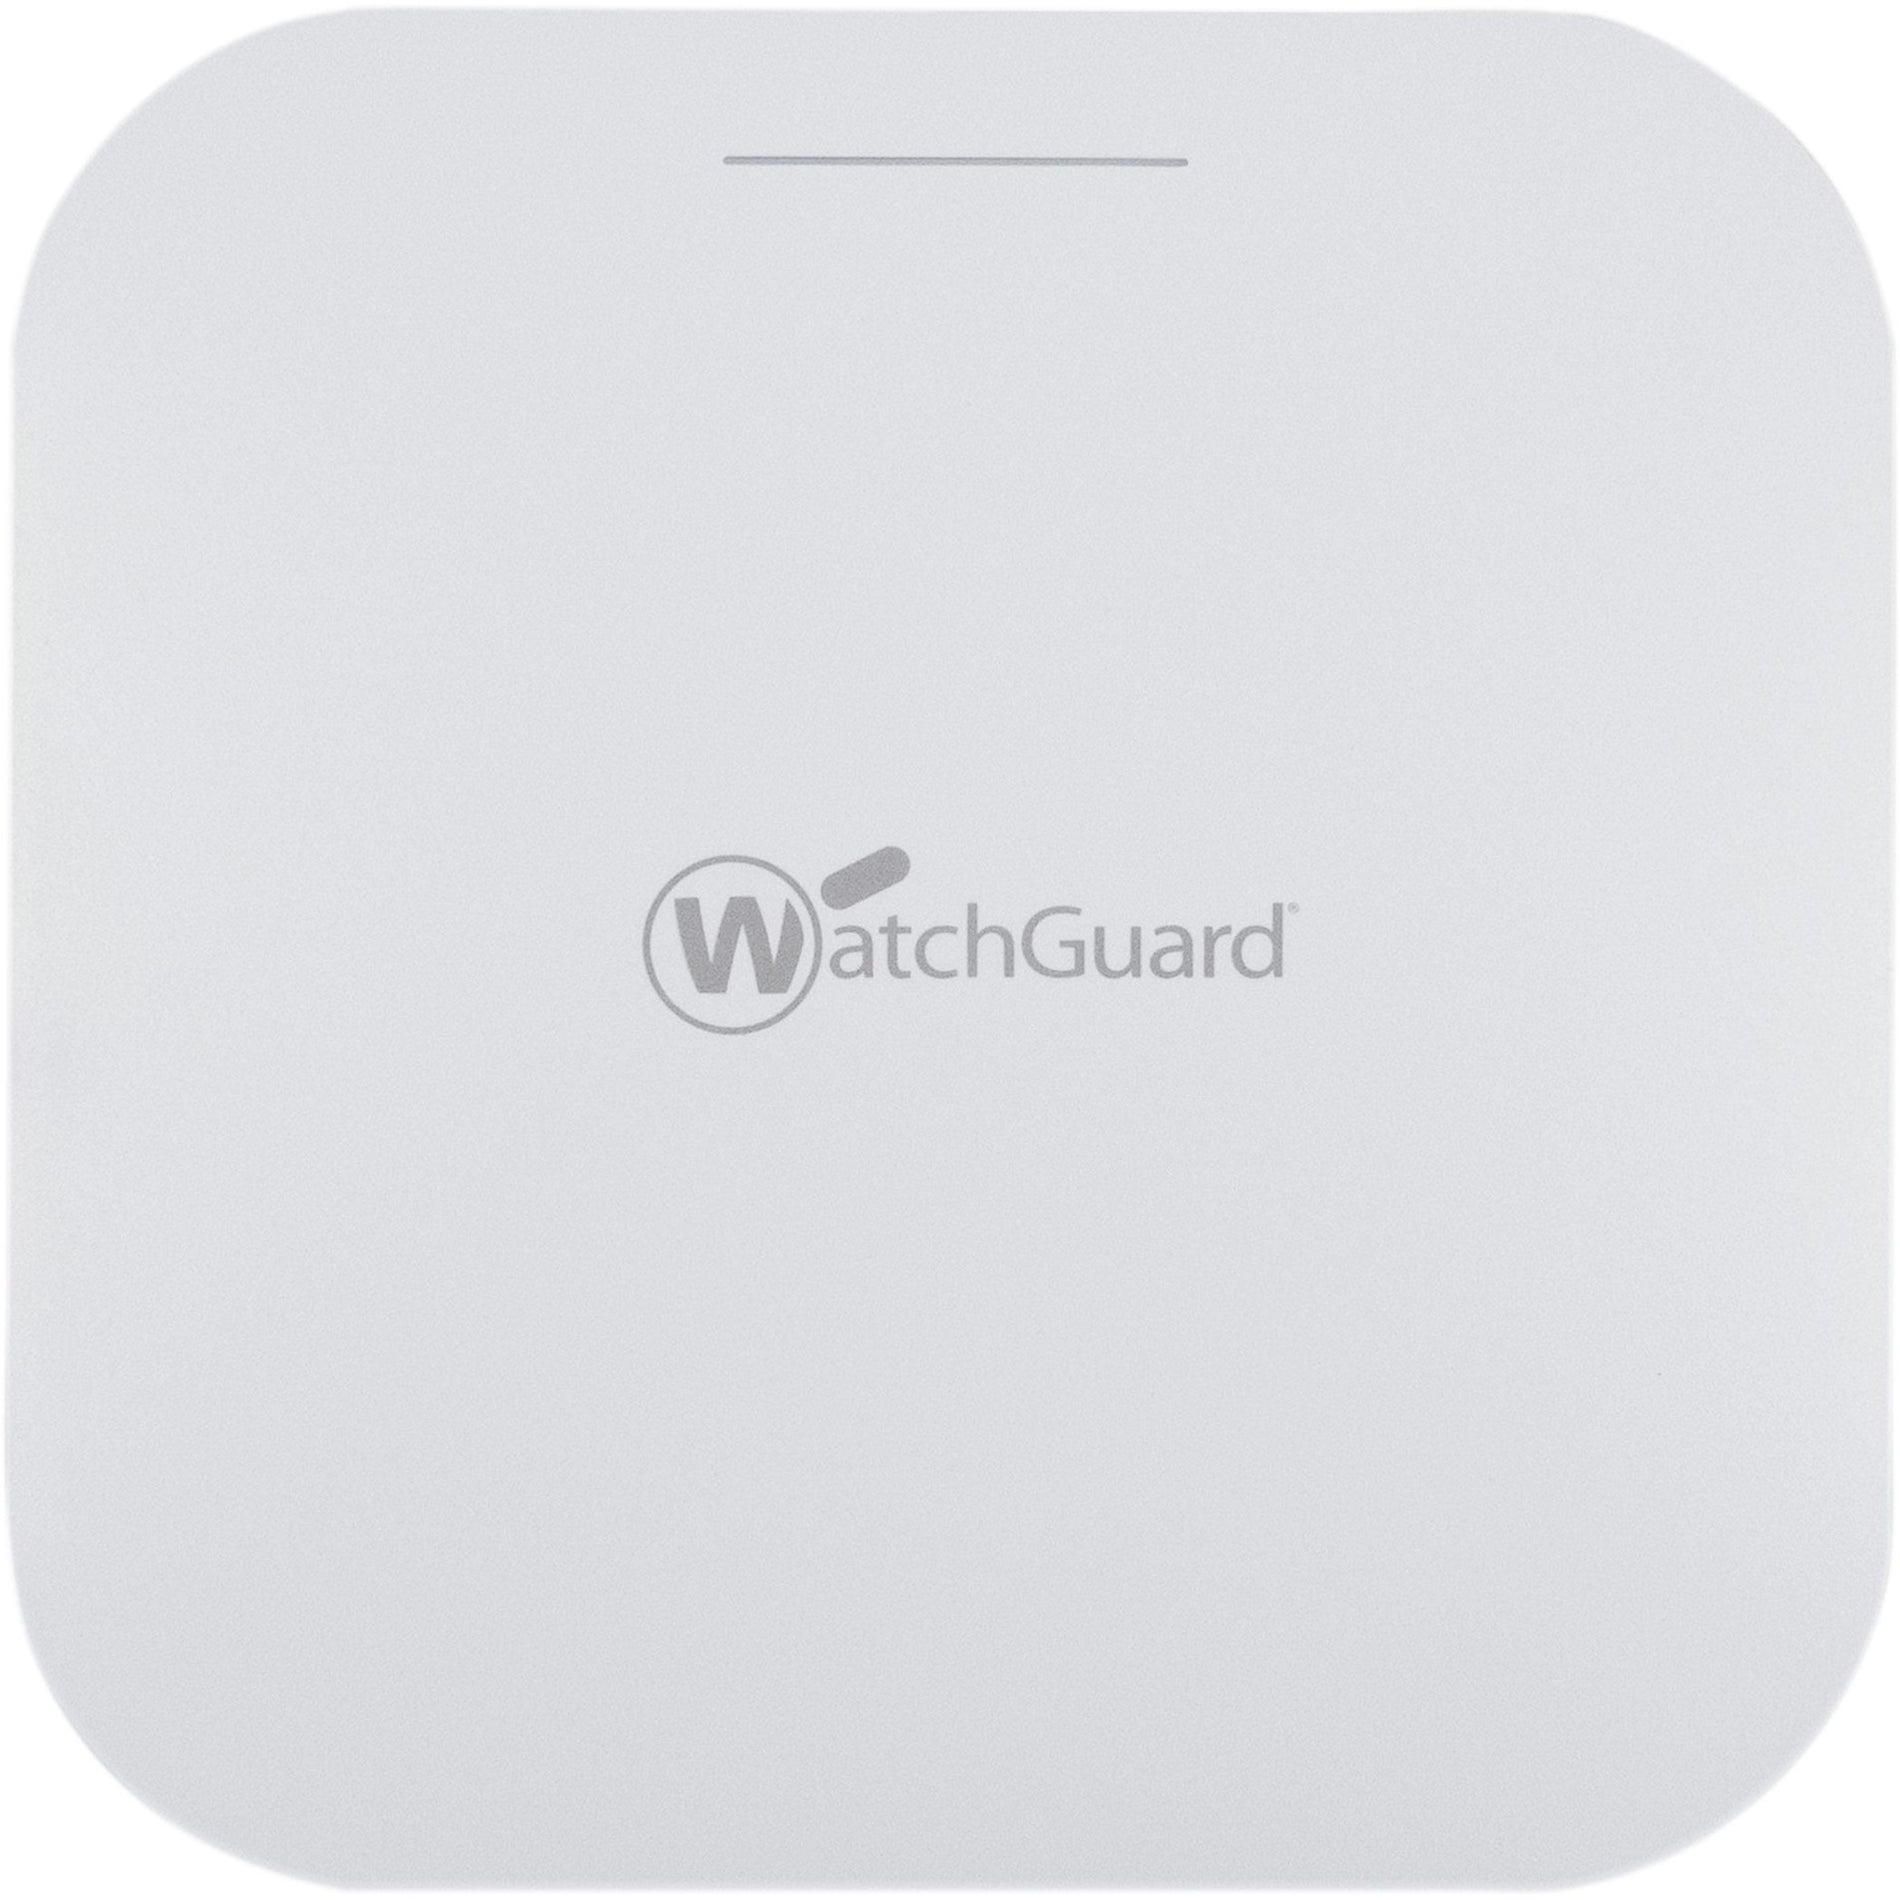 WatchGuard WGA43200000 AP432 Indoor Access Point, Dual Band, 802.11ax, 3.46 Gbit/s